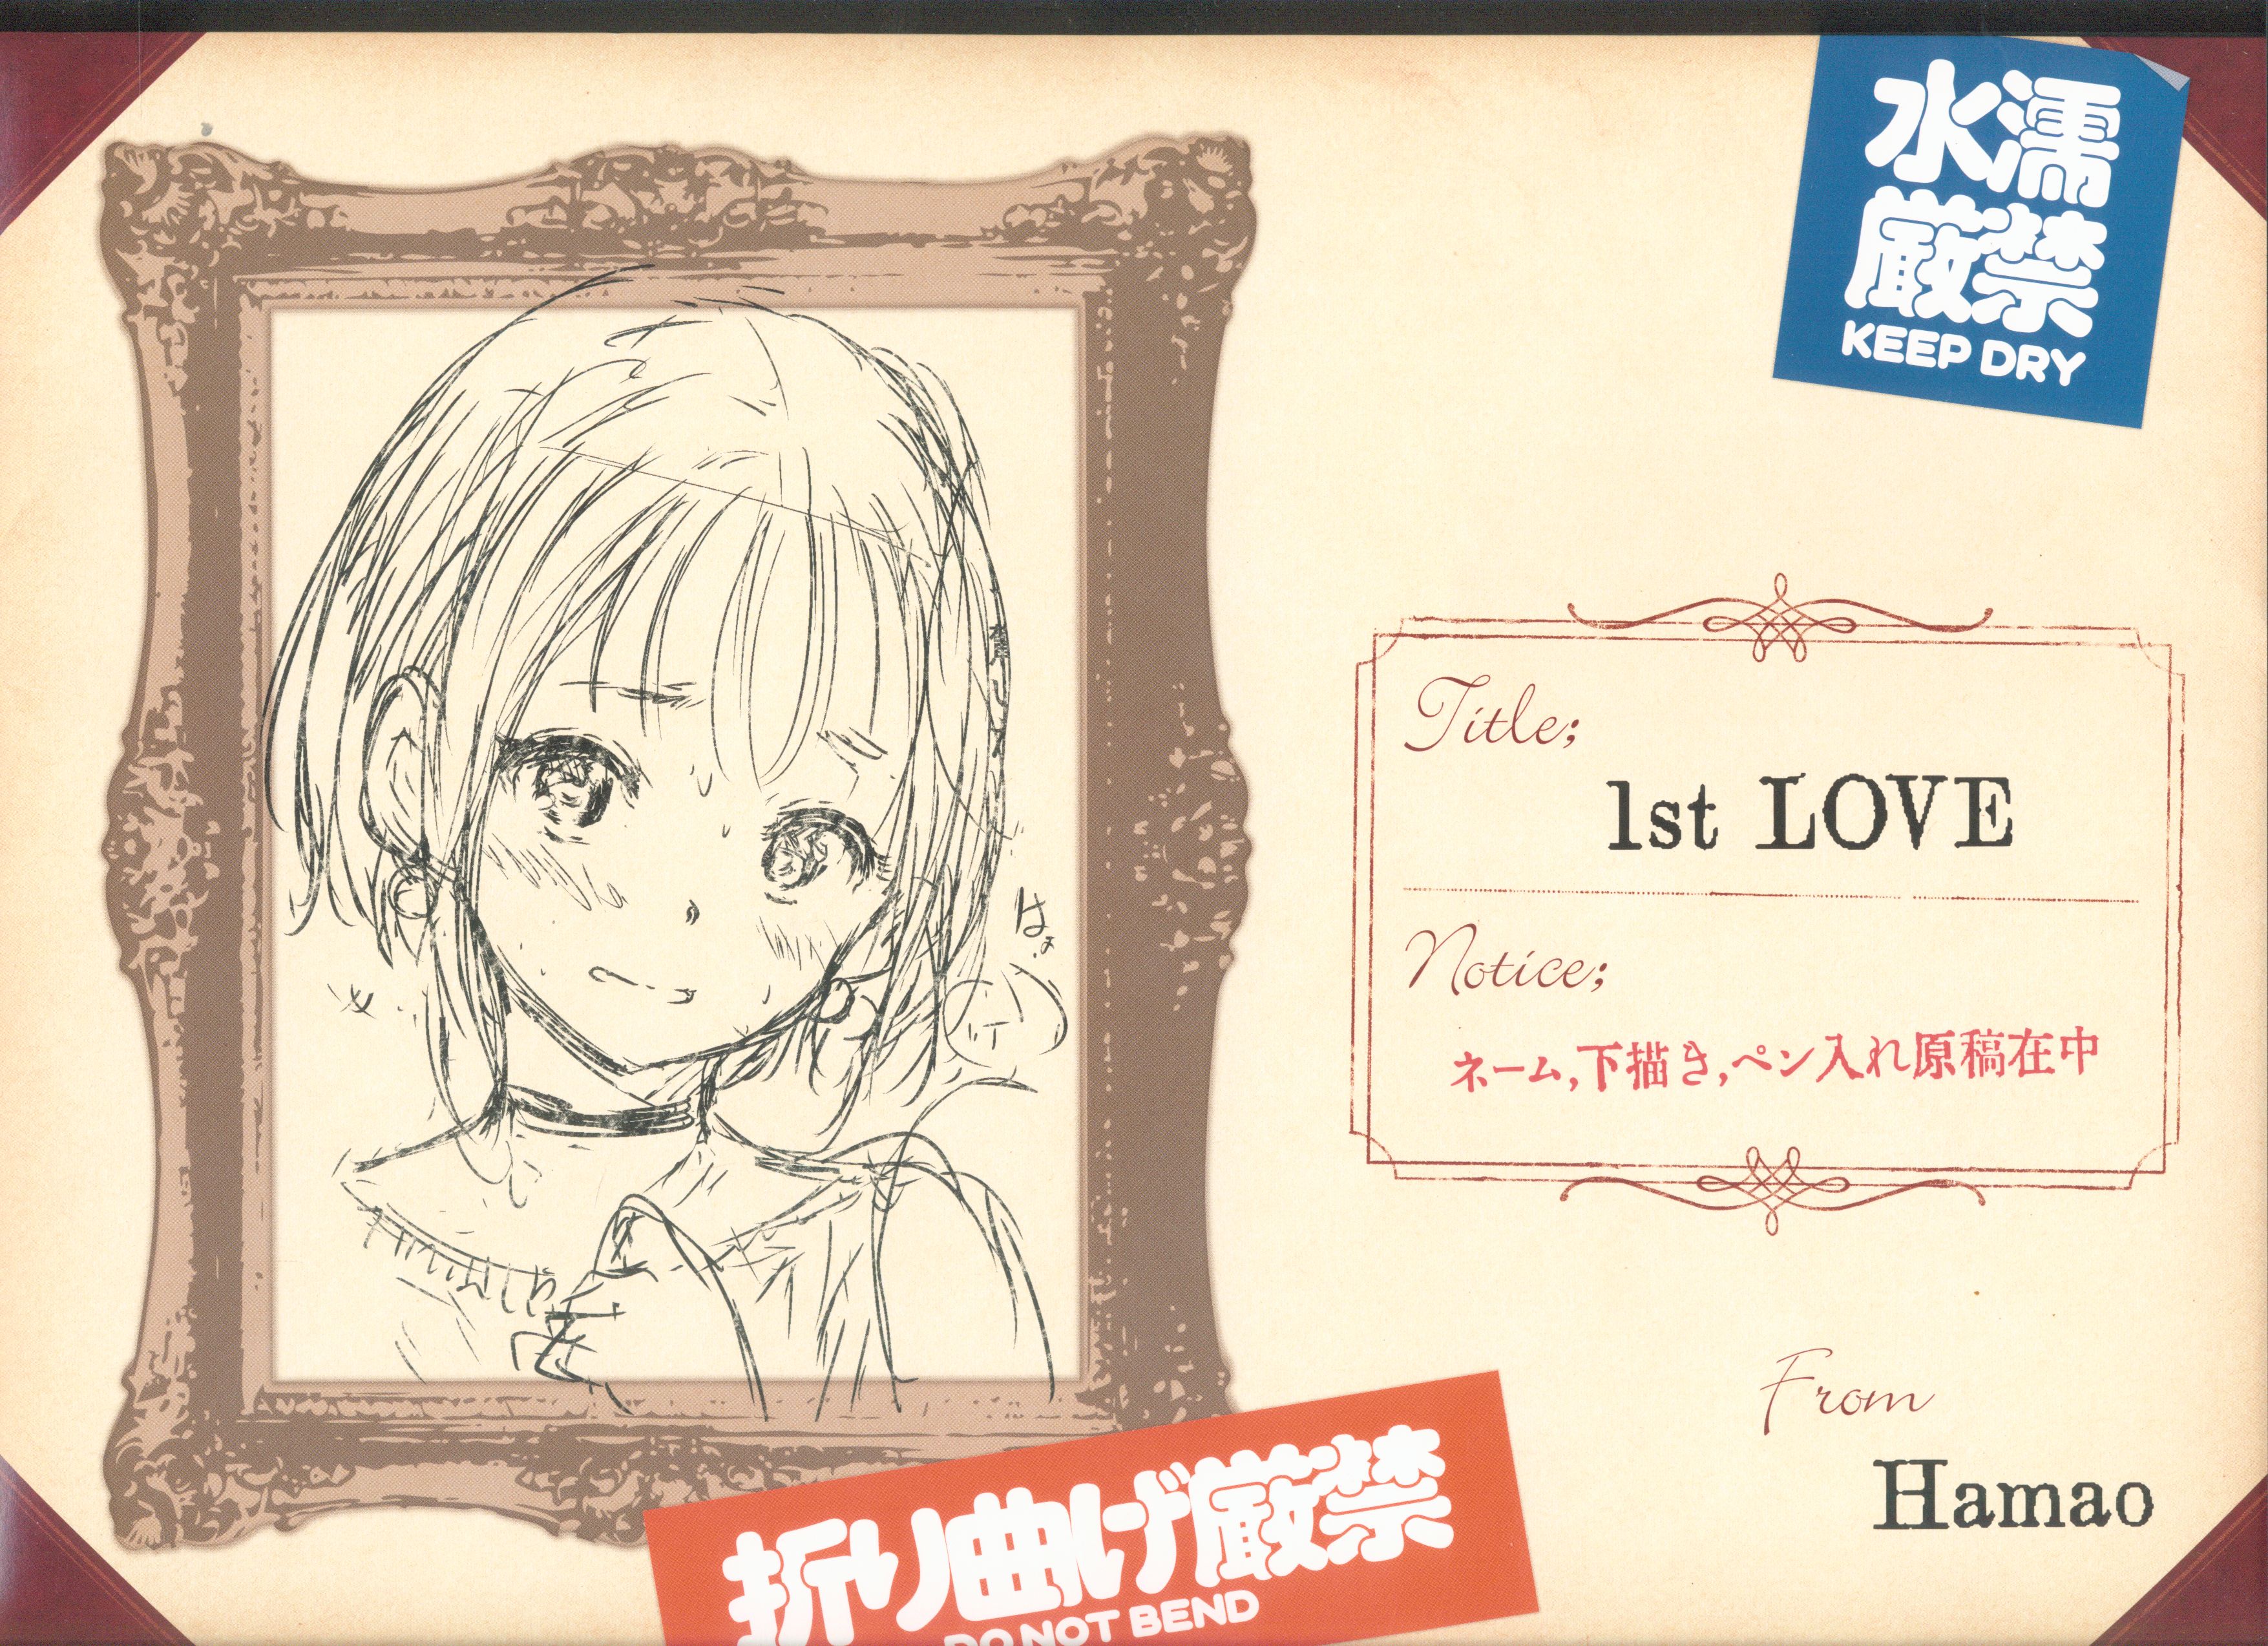 Hamao 1st love